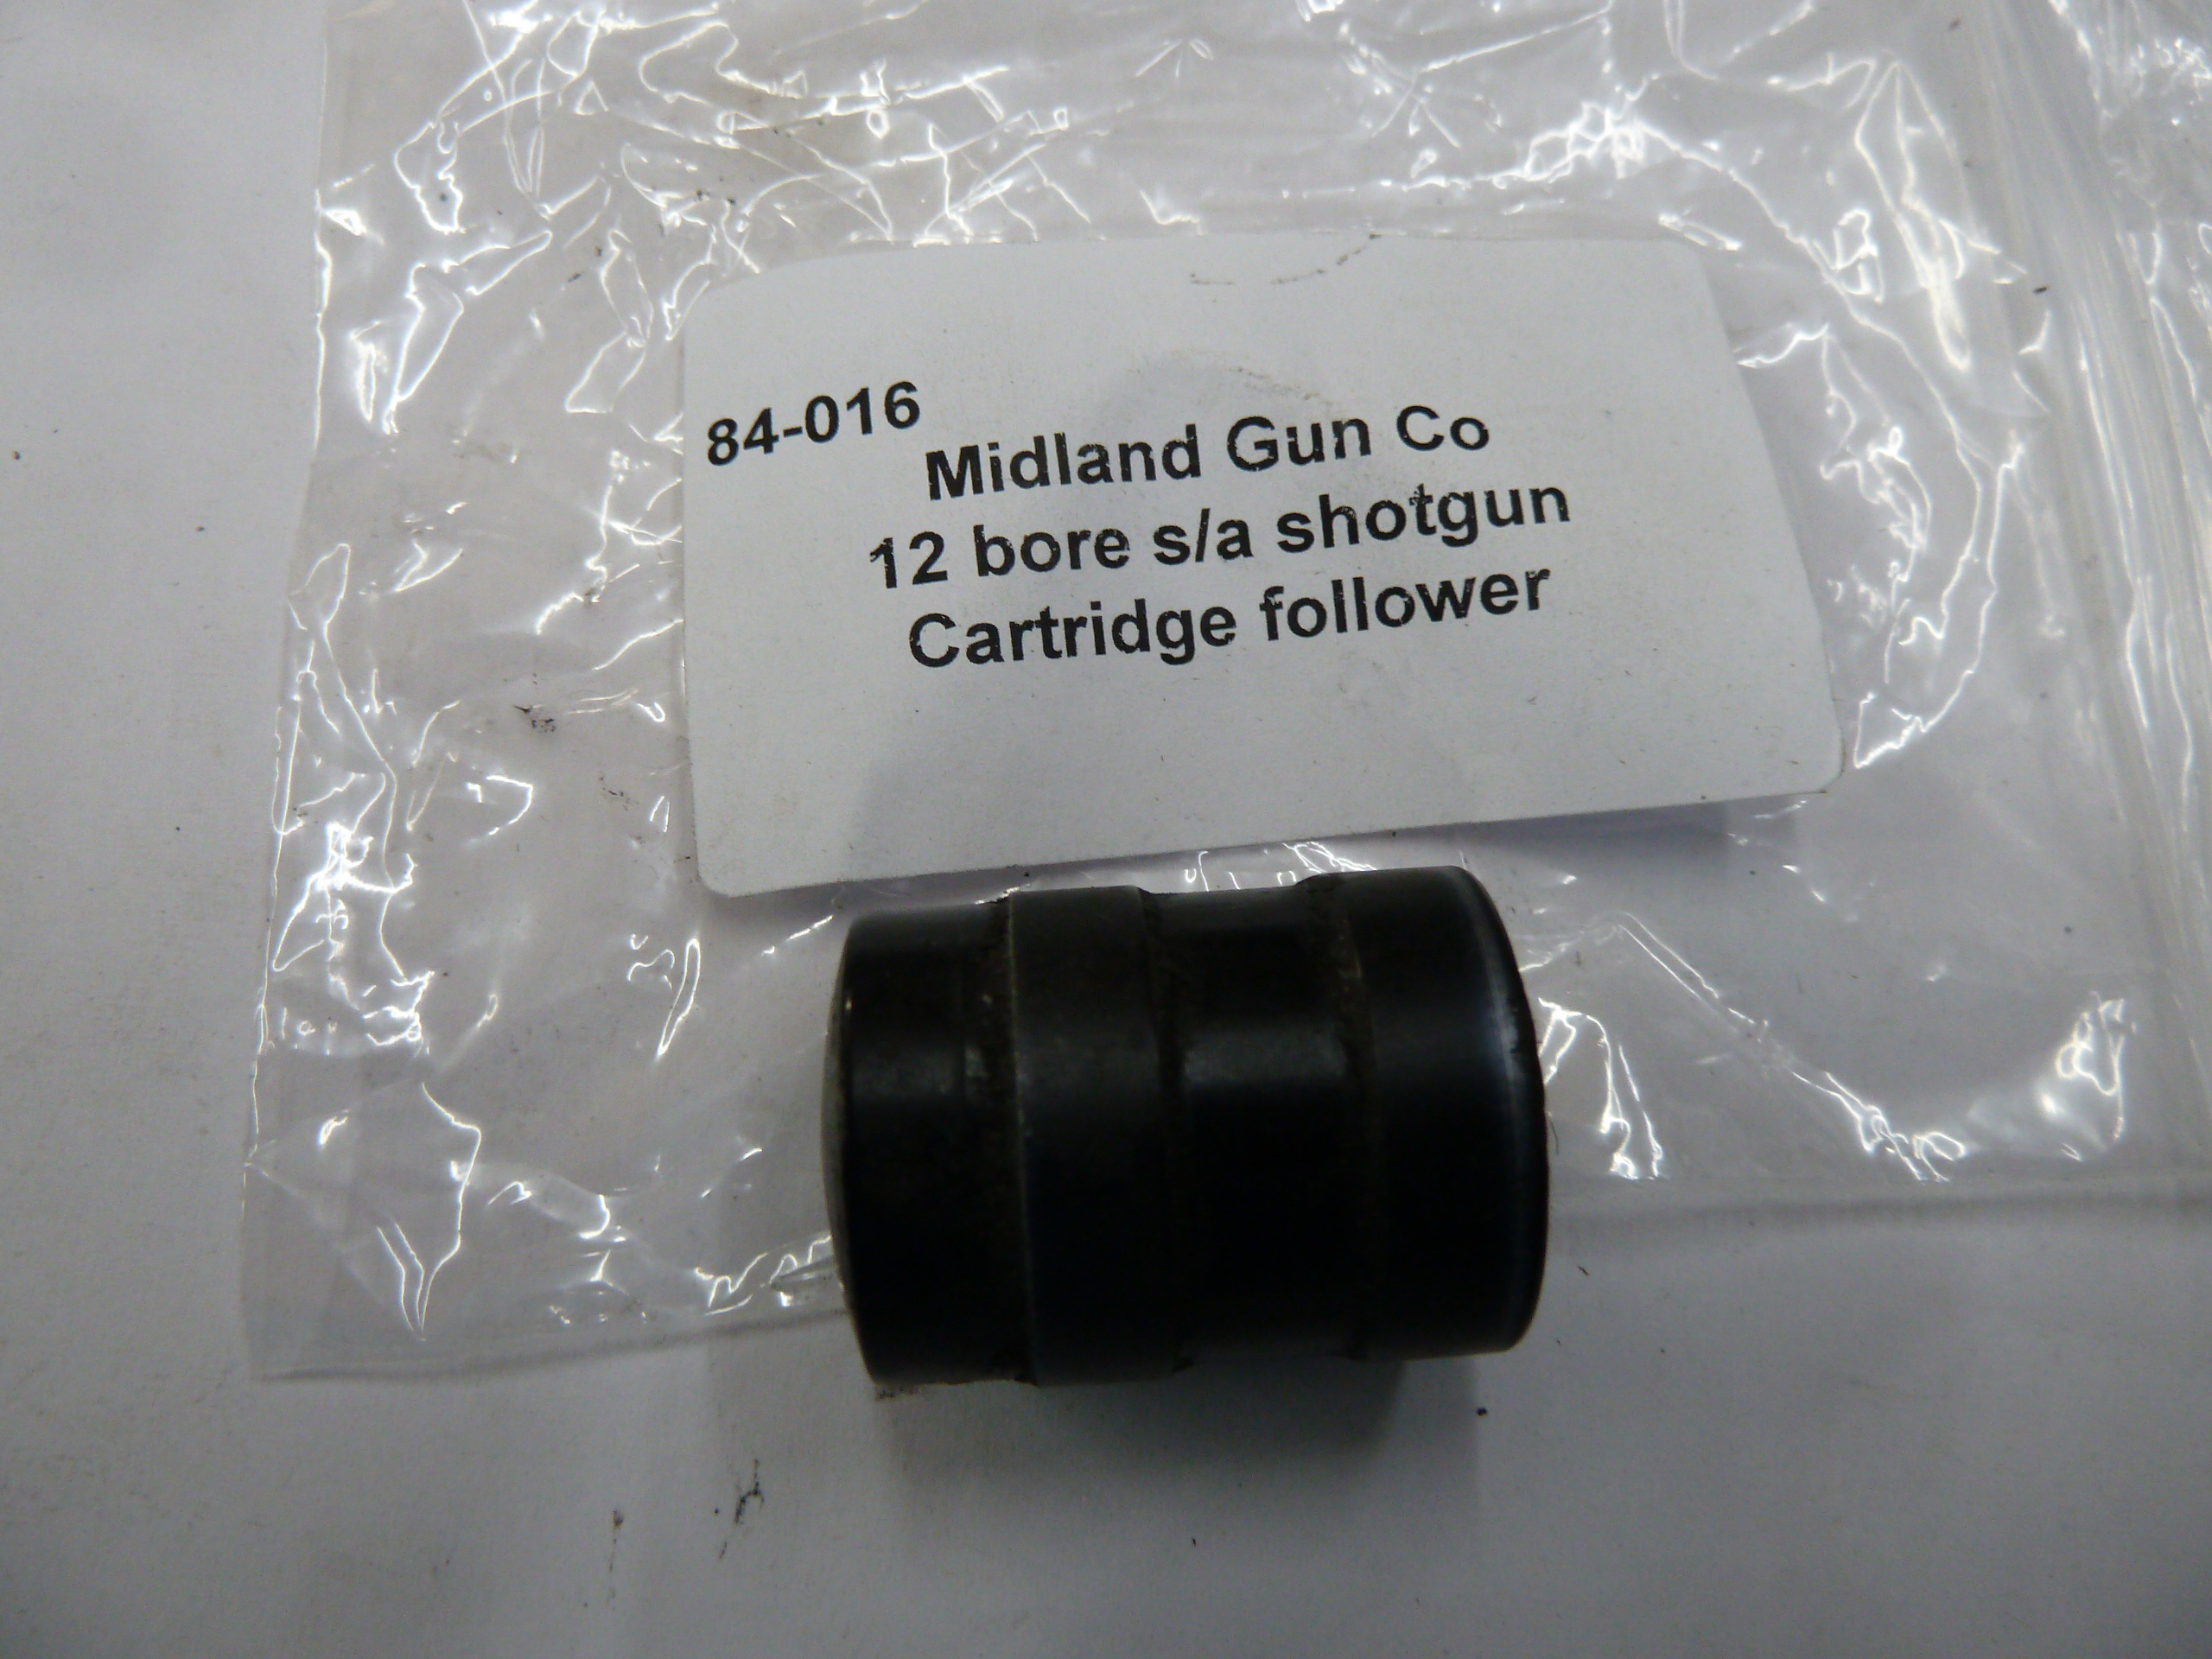 Midland Gun Co cartridge follower